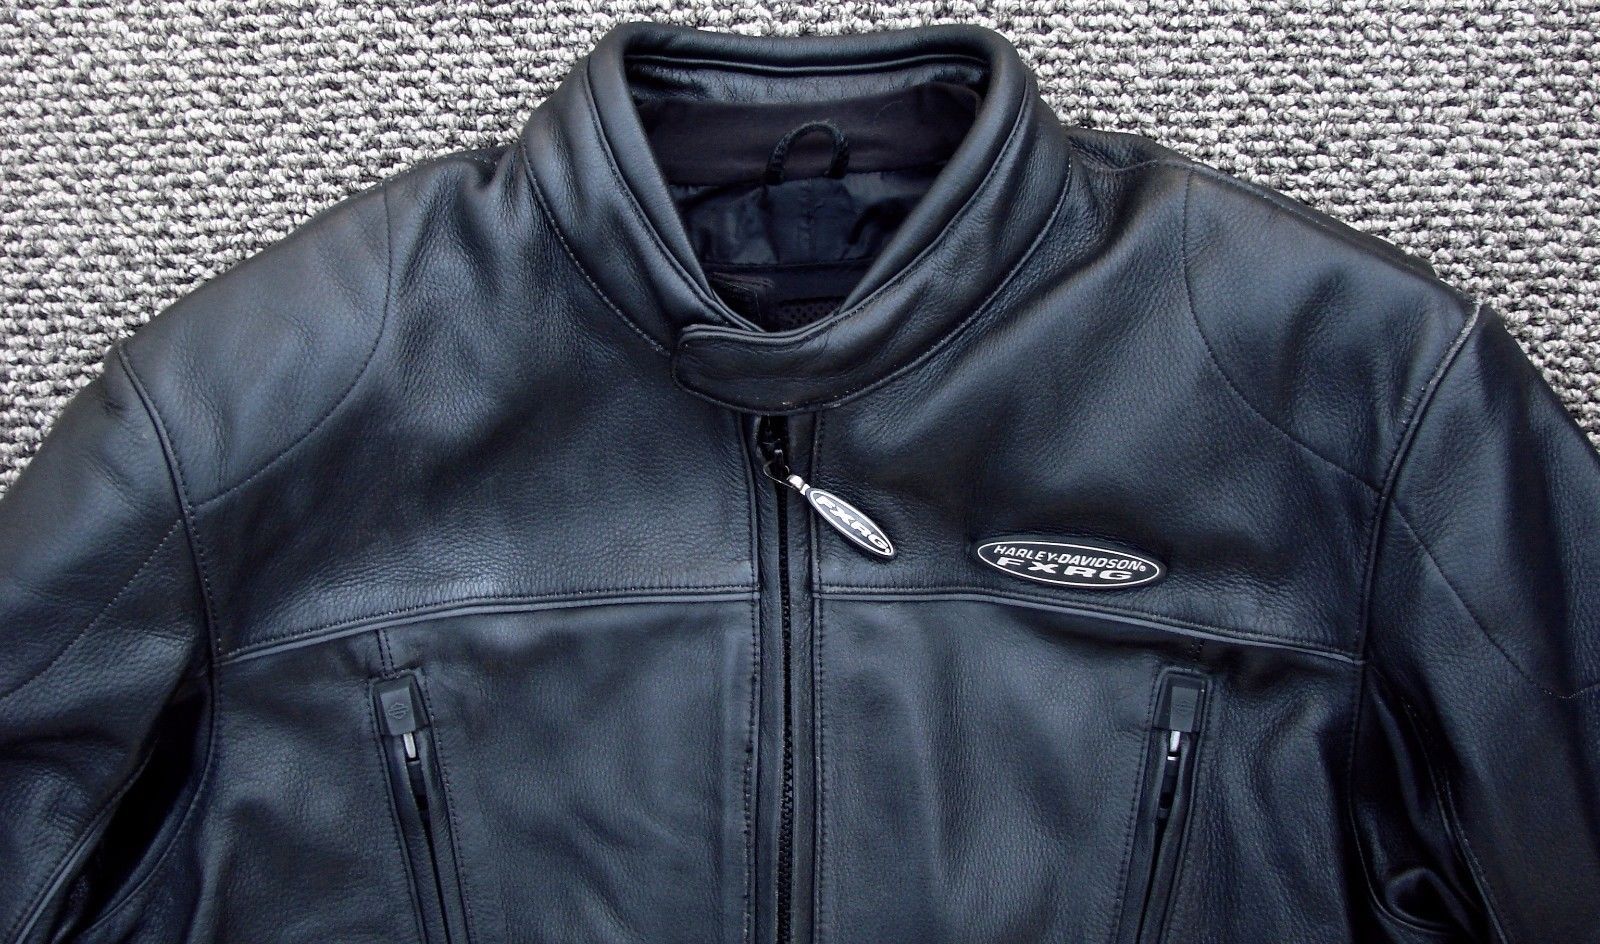 Harley Davidson FXRG Motorcycle Leather Jacket Waterproof No Liner L  98518-09vm 